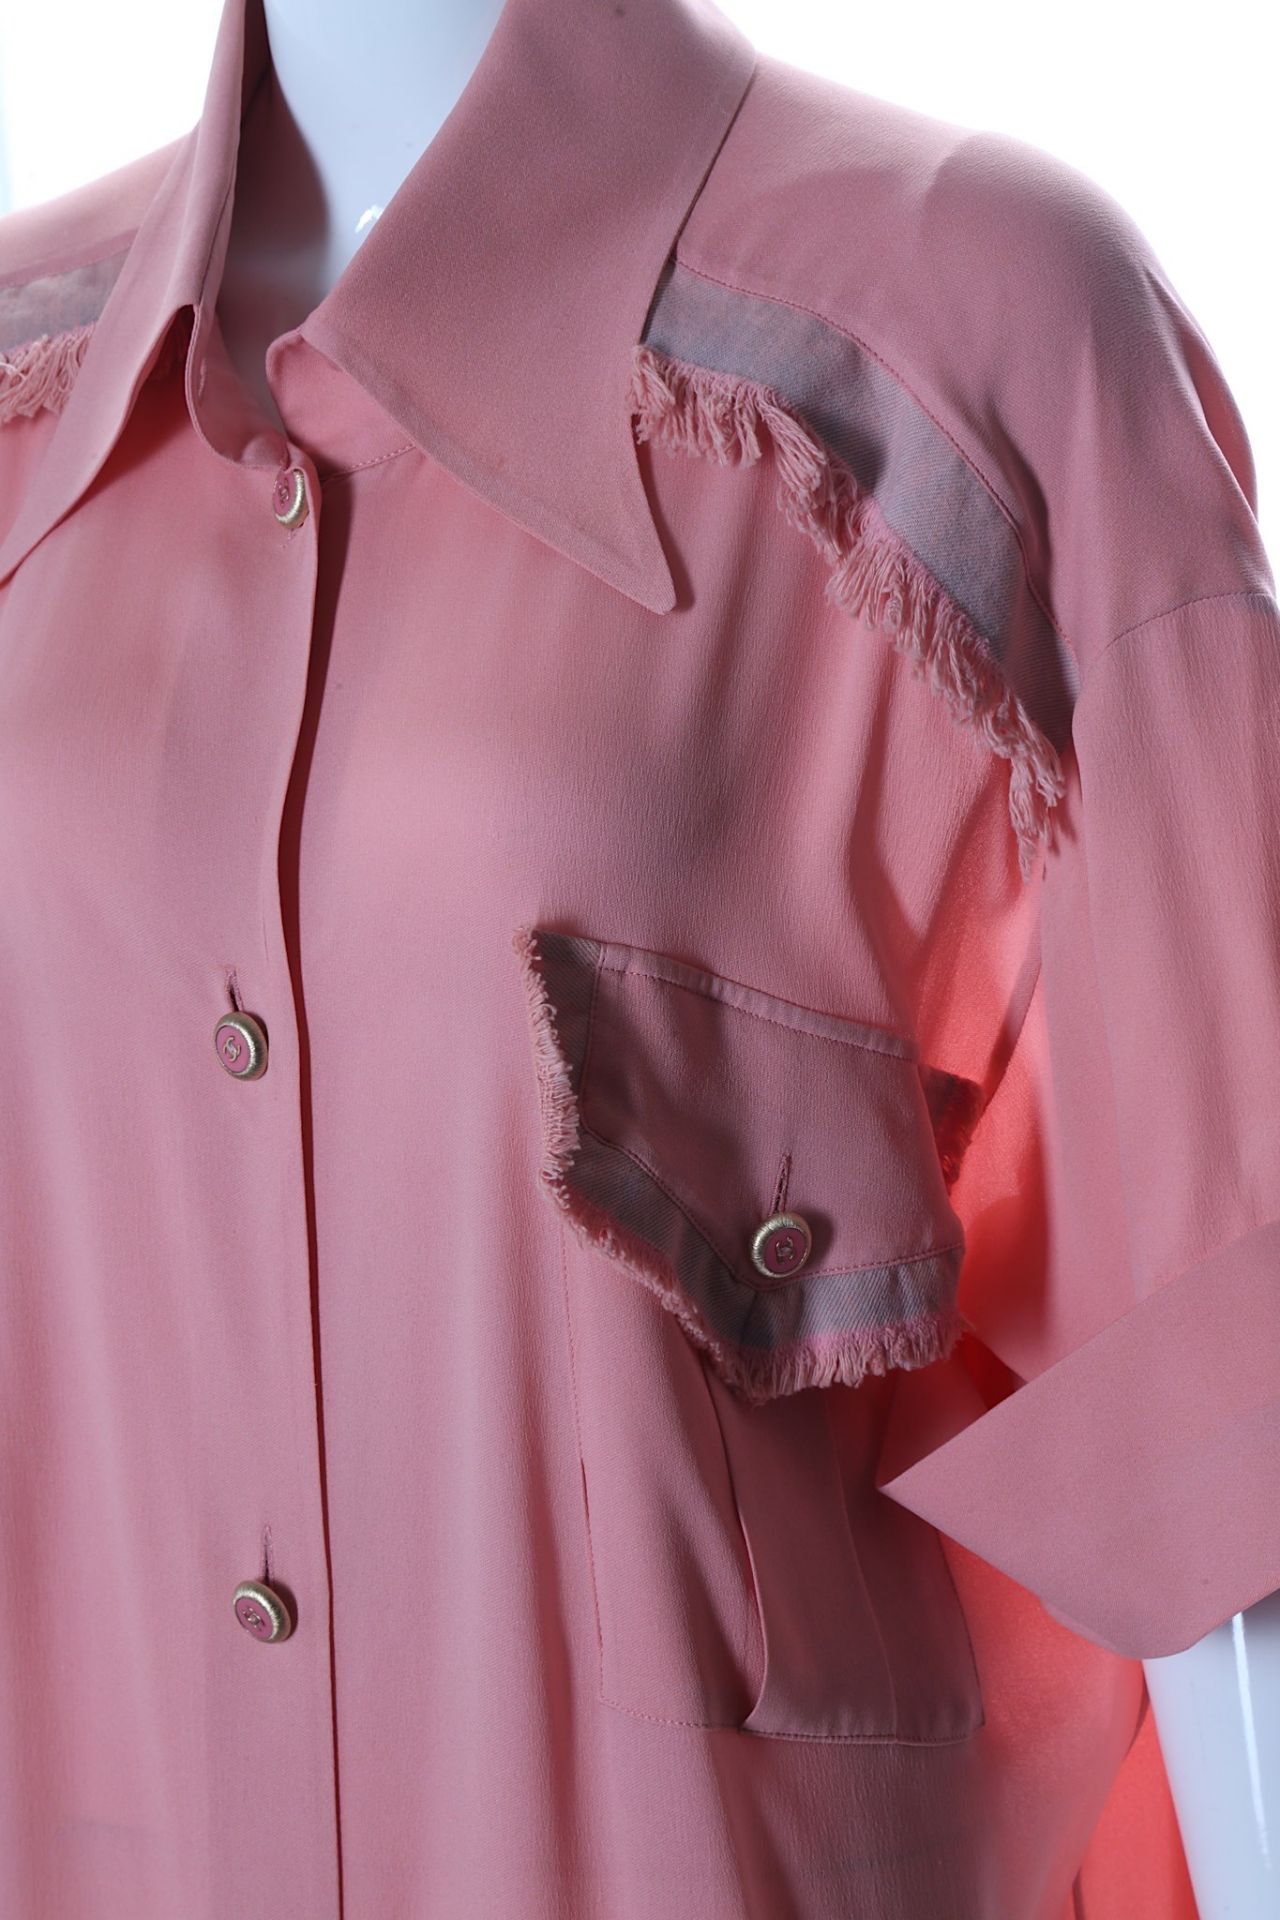 Chanel Pink Georgette Crepe Silk Shirt Dress, Summ - Image 2 of 5